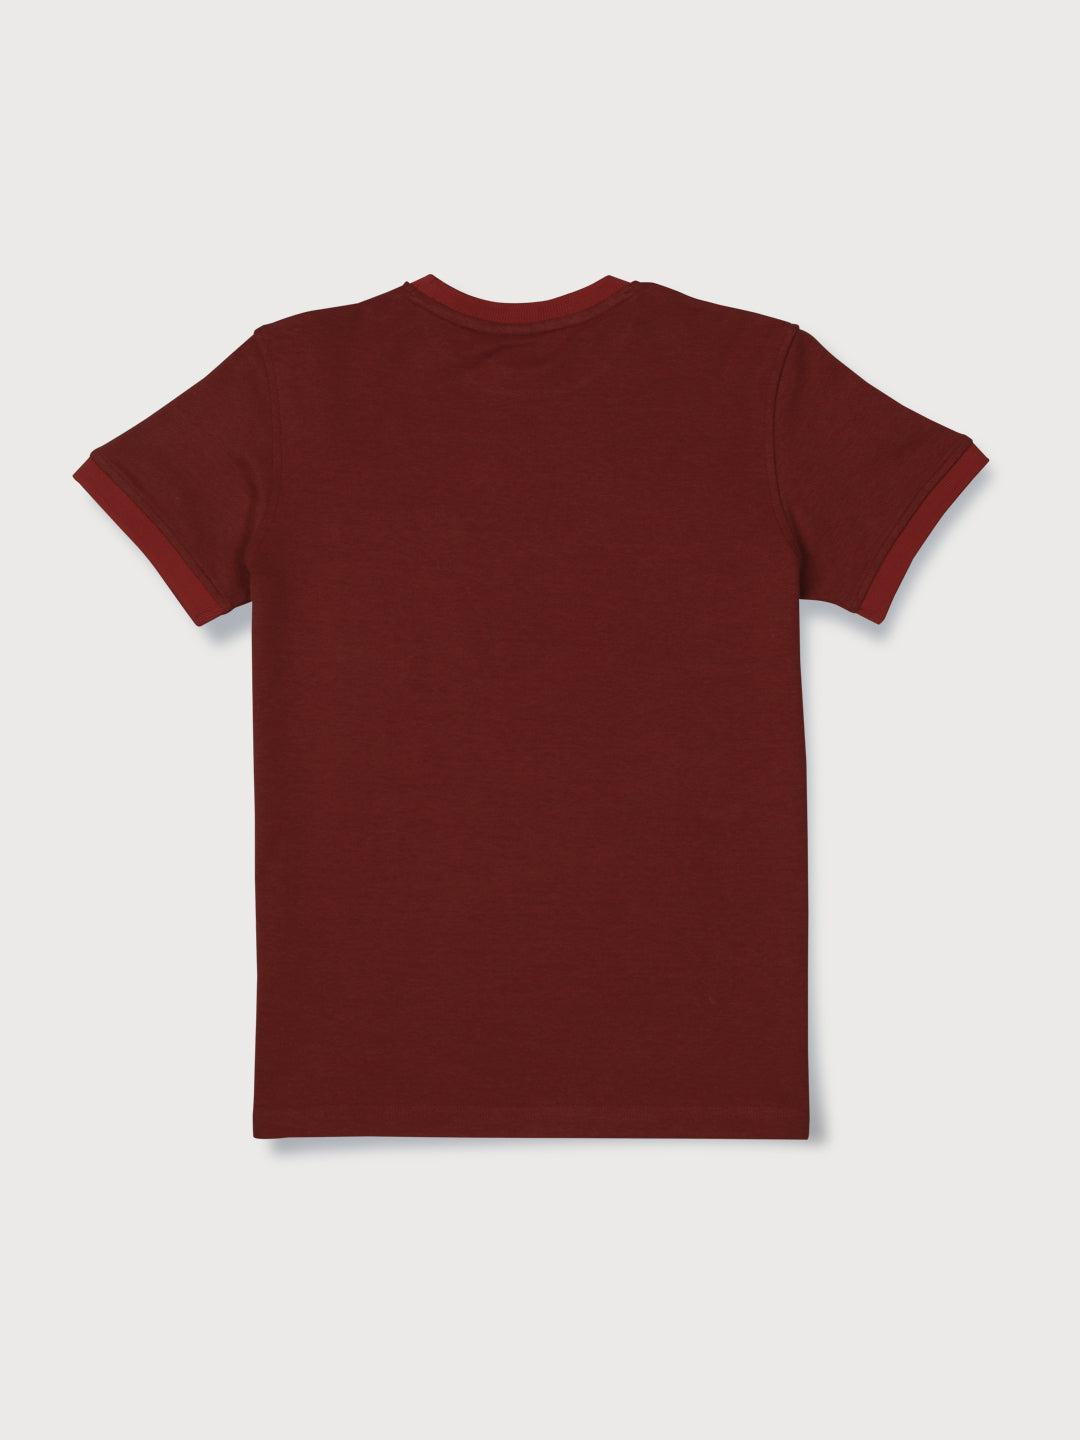 Boys Maroon Solid Knits T-Shirt